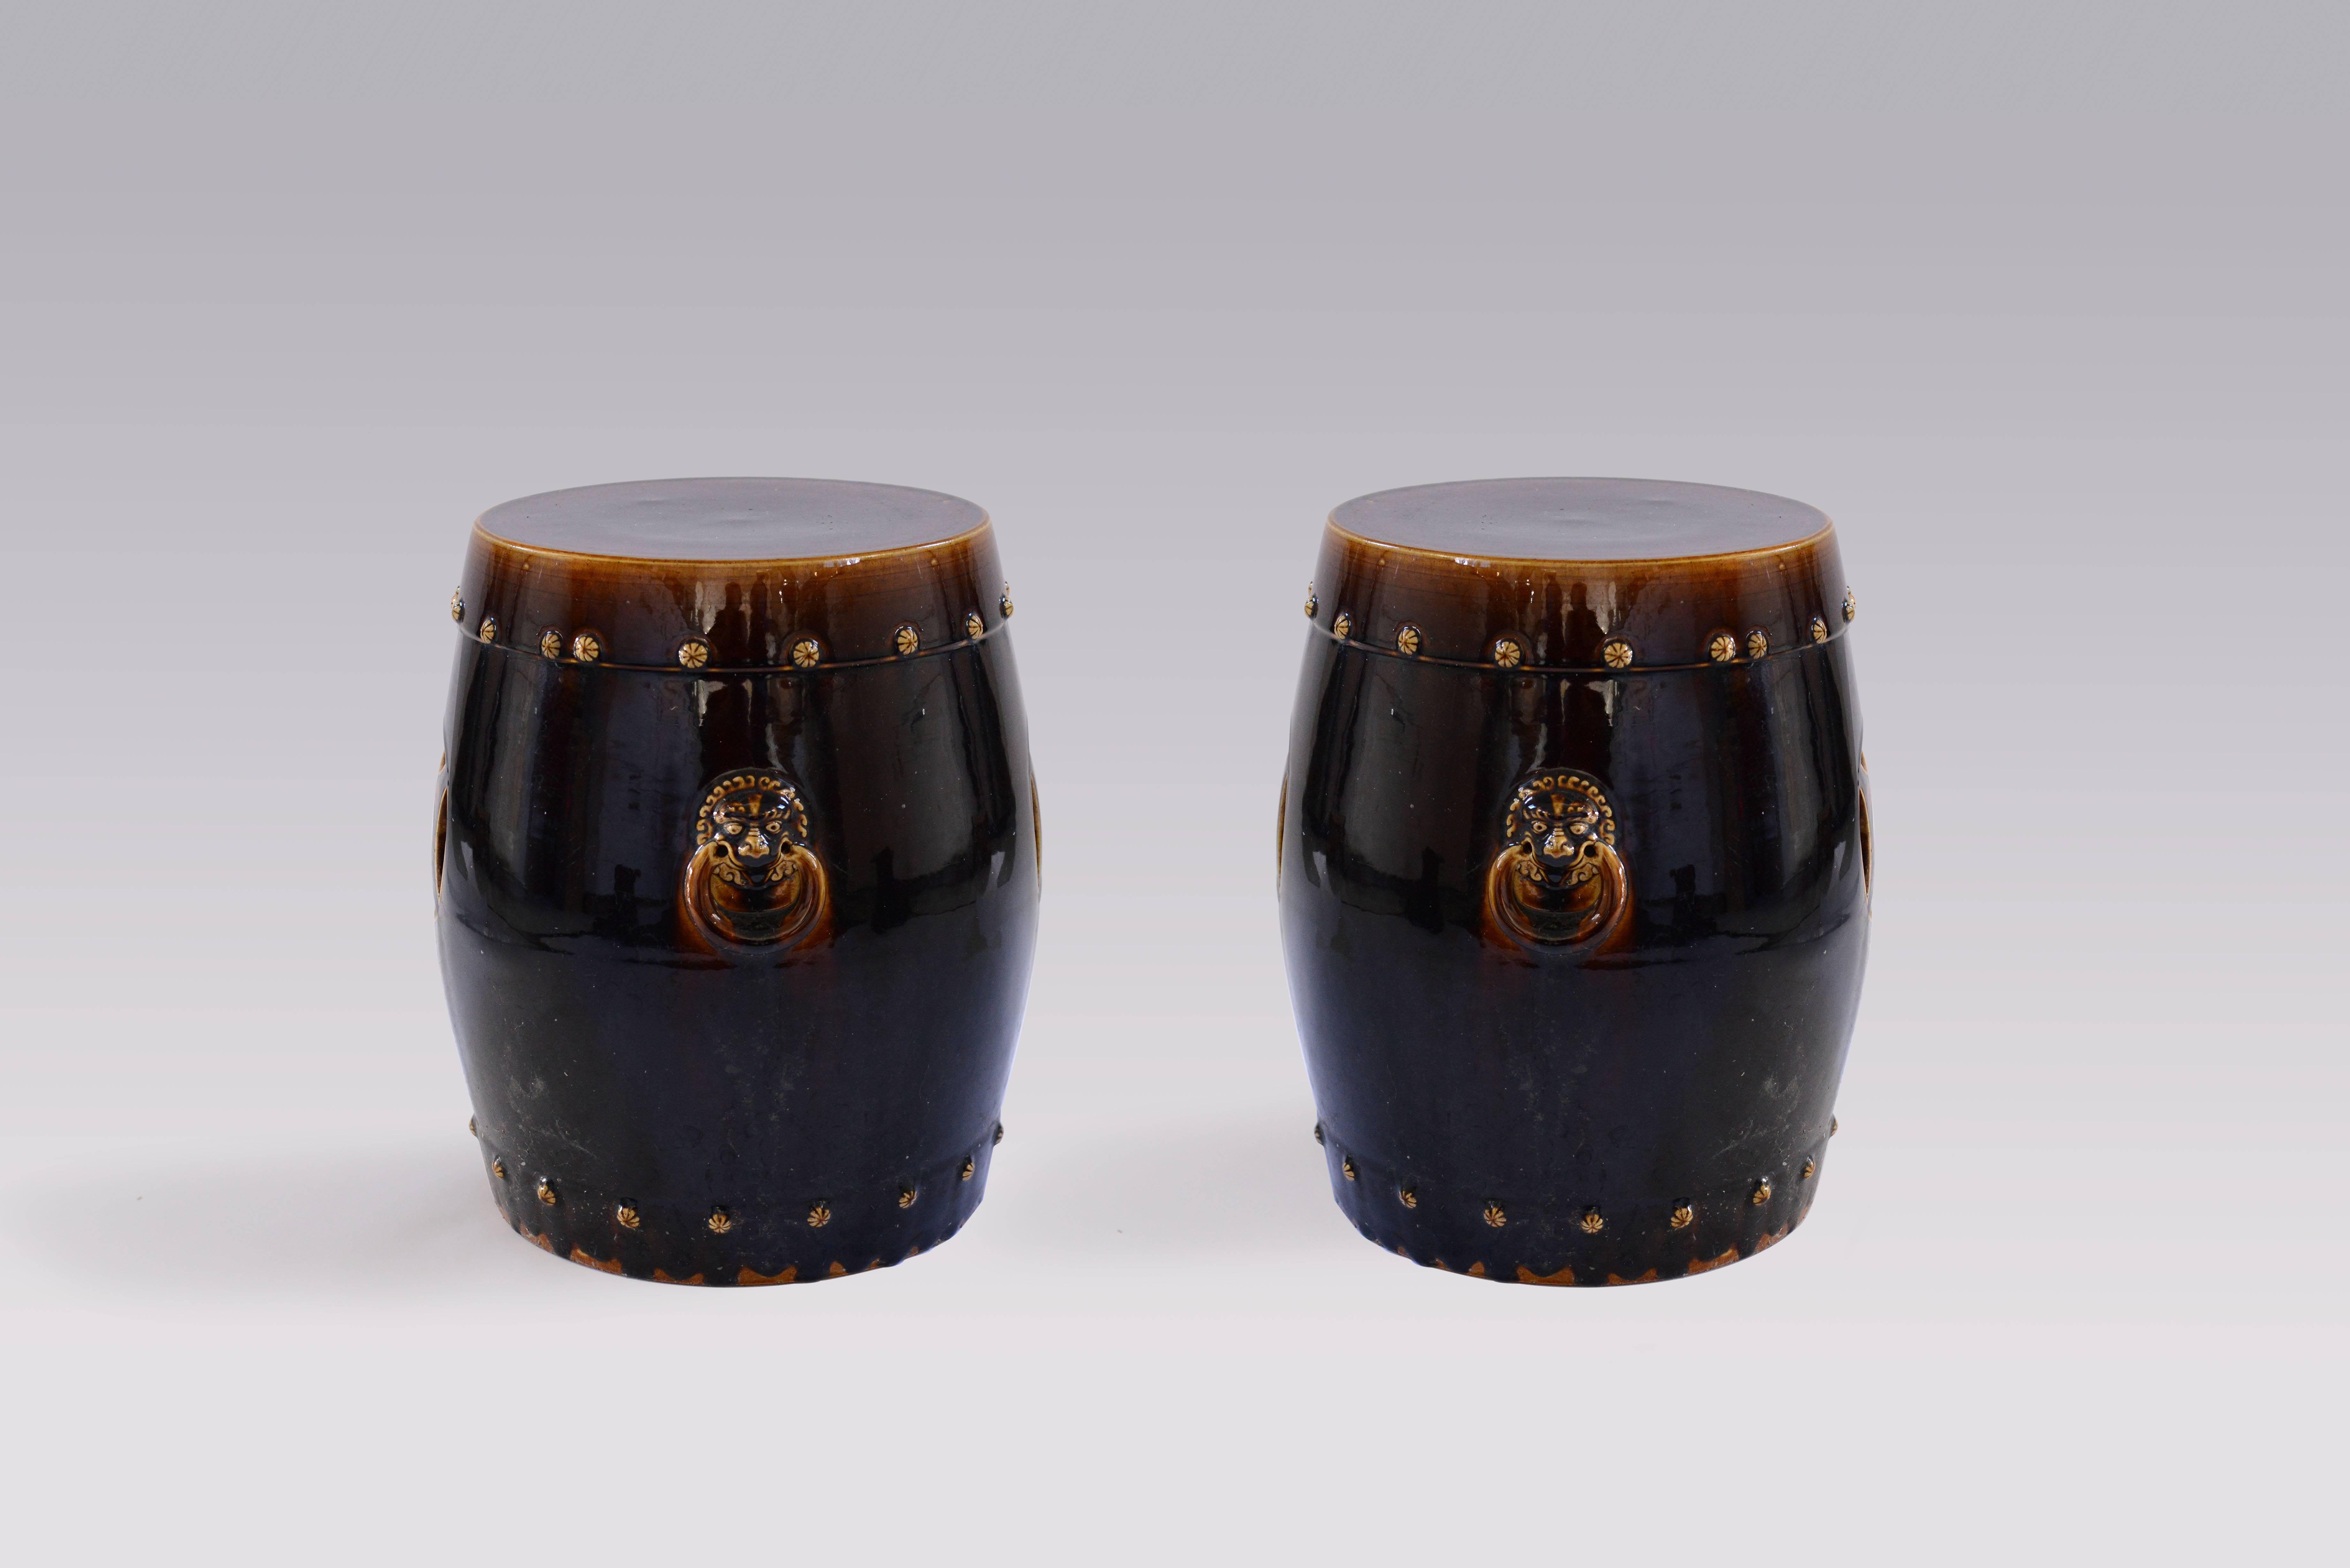 A pair of elegant dark glazed ceramic stools with handles.

